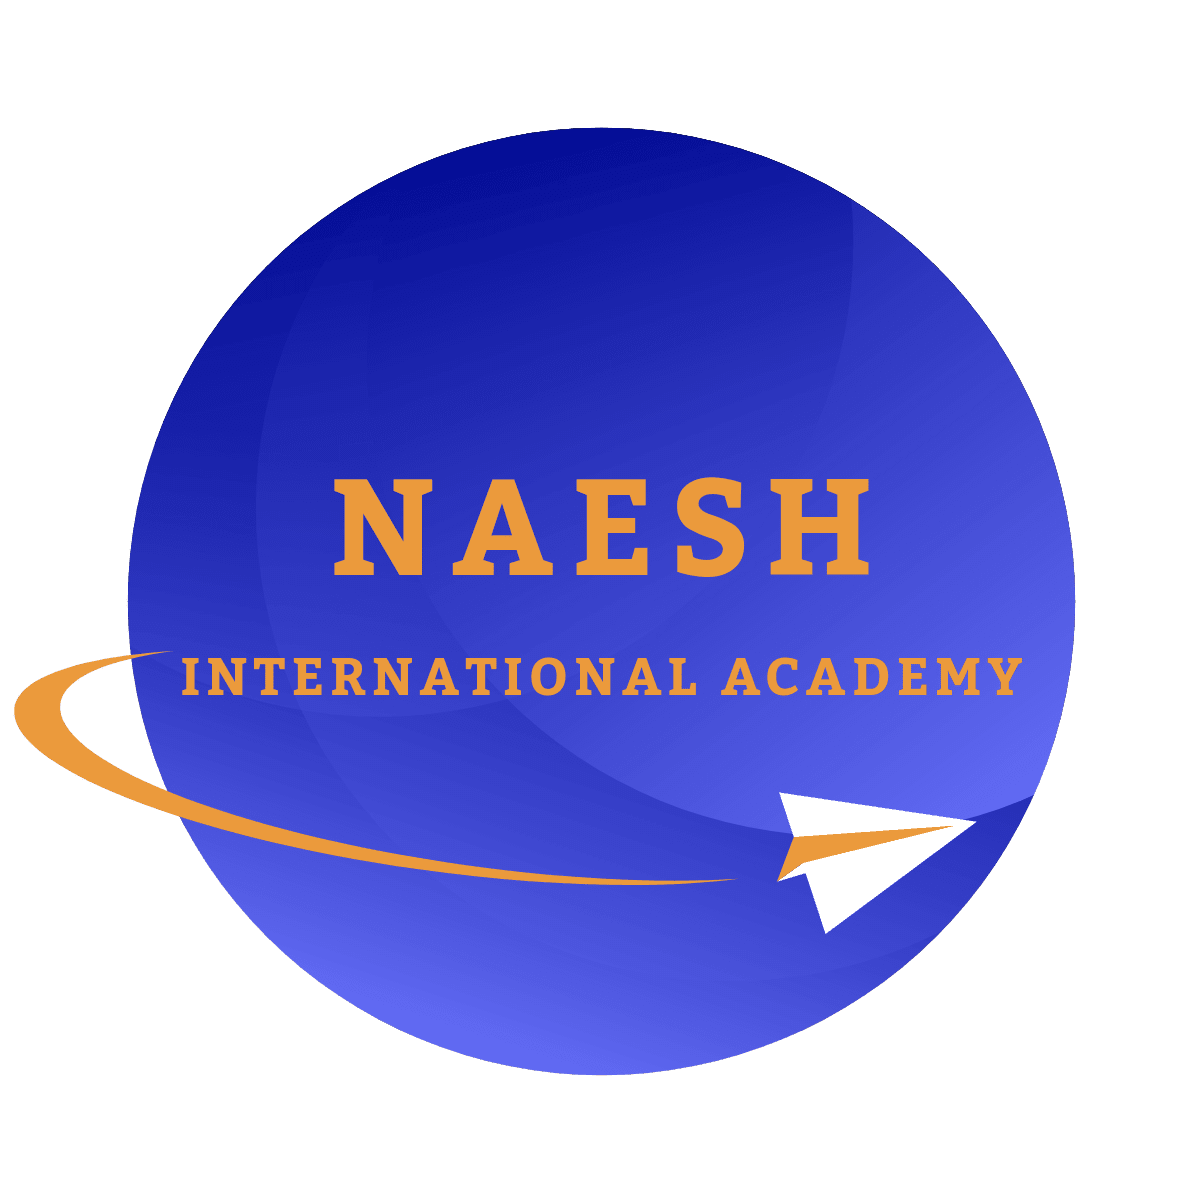 Naesh International Academy